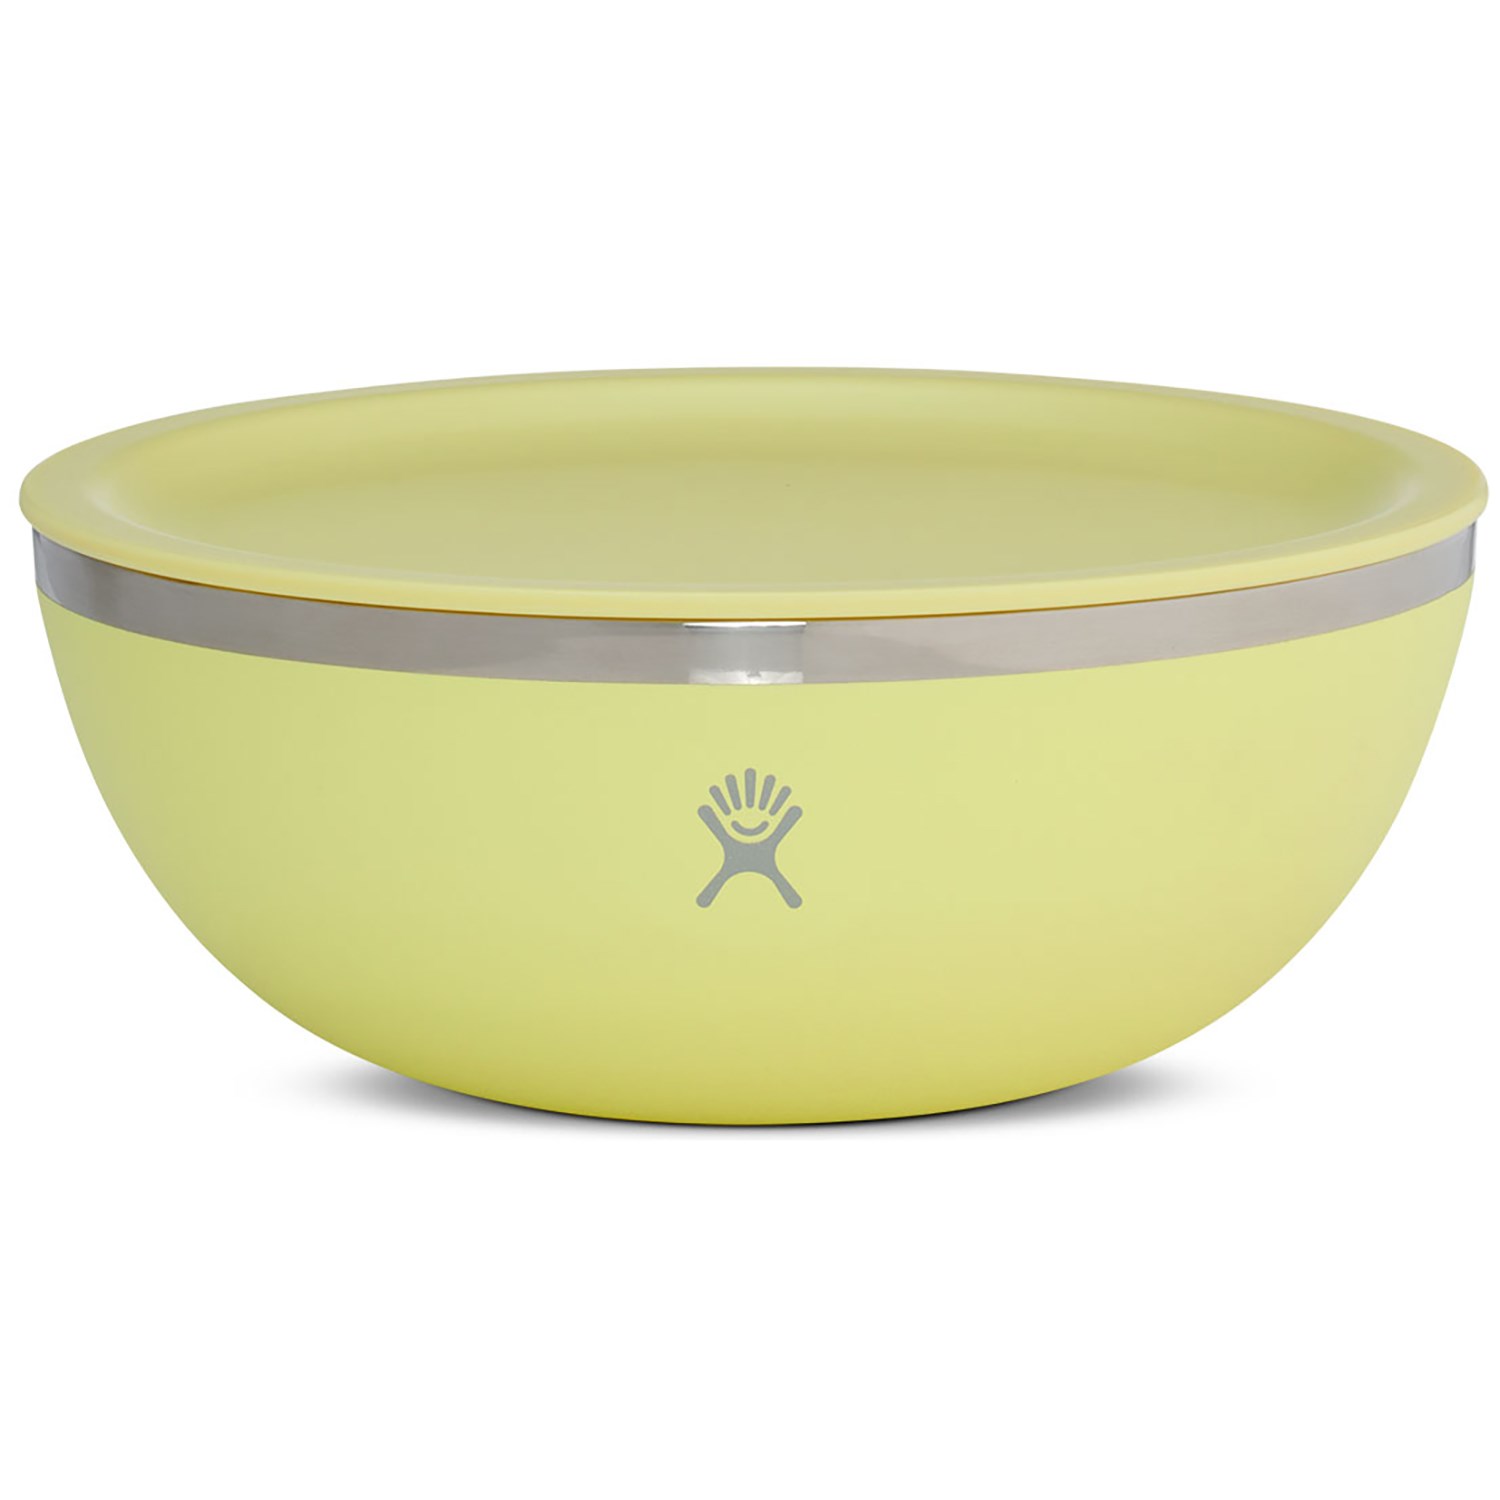 https://images.evo.com/imgp/zoom/188731/783821/hydro-flask-1-quart-bowl-with-lid-.jpg